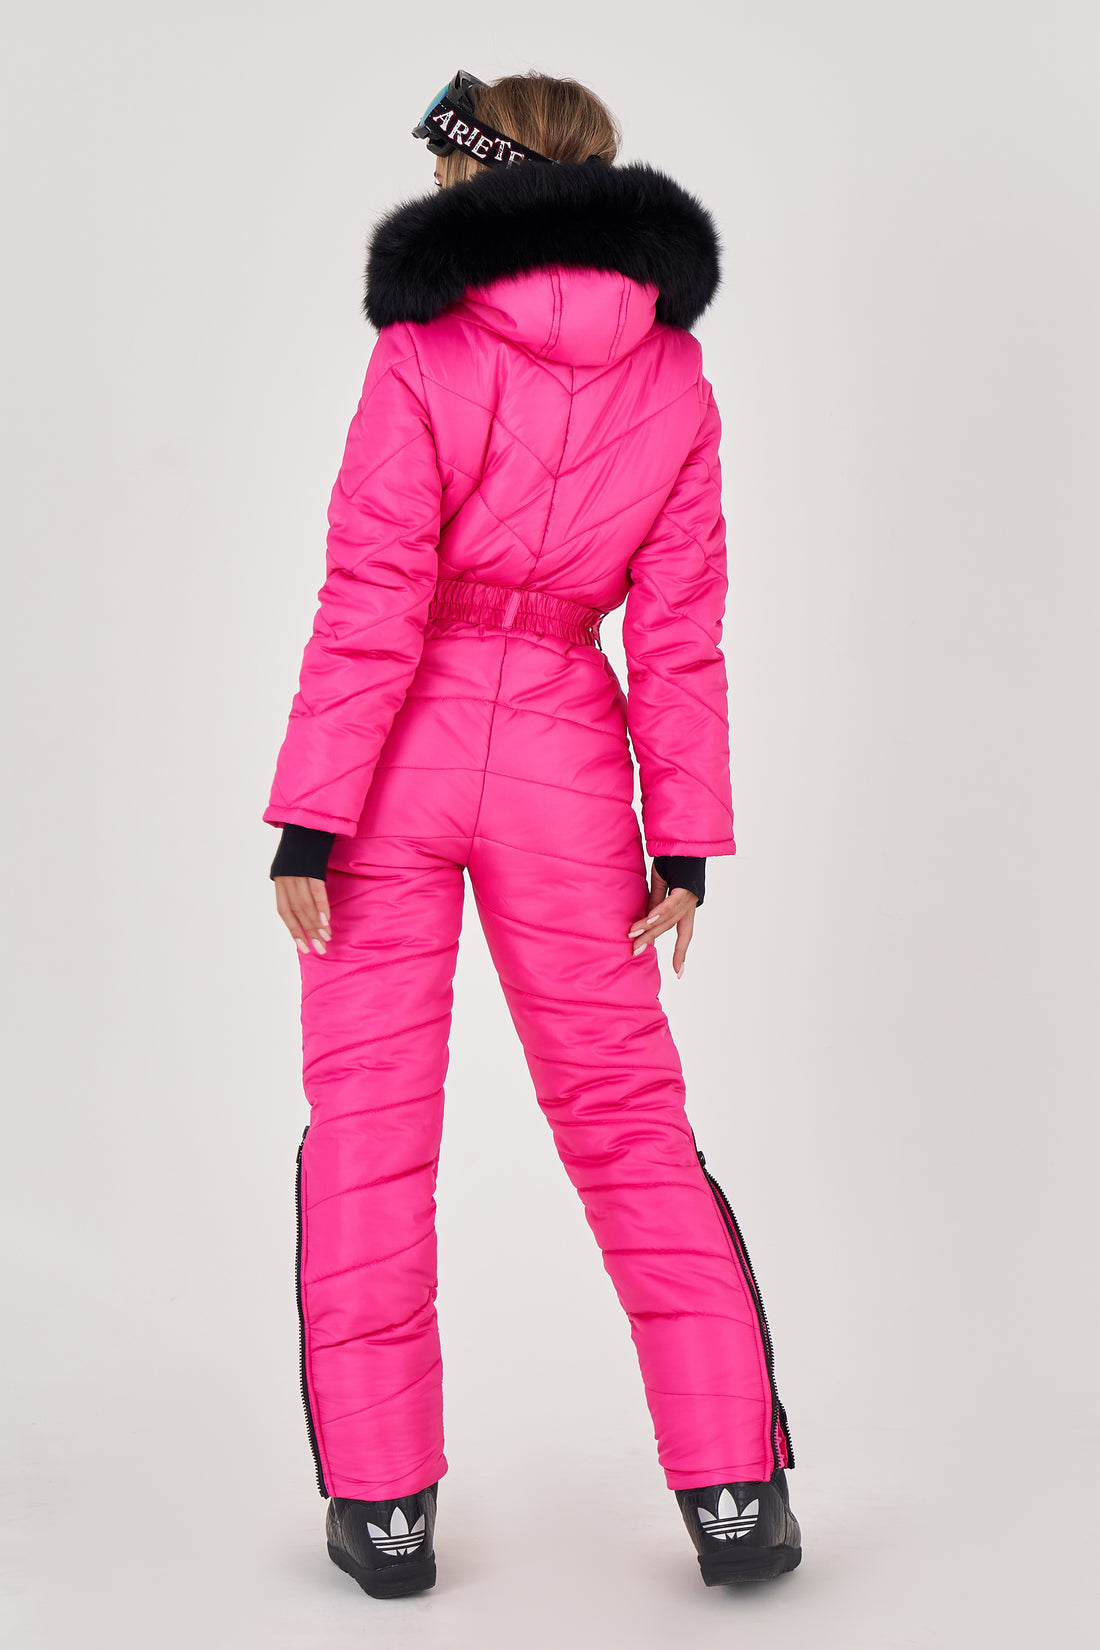 Pink warm winter jumpsuit  - ELIAS - PINK - women's one piece snowsuit